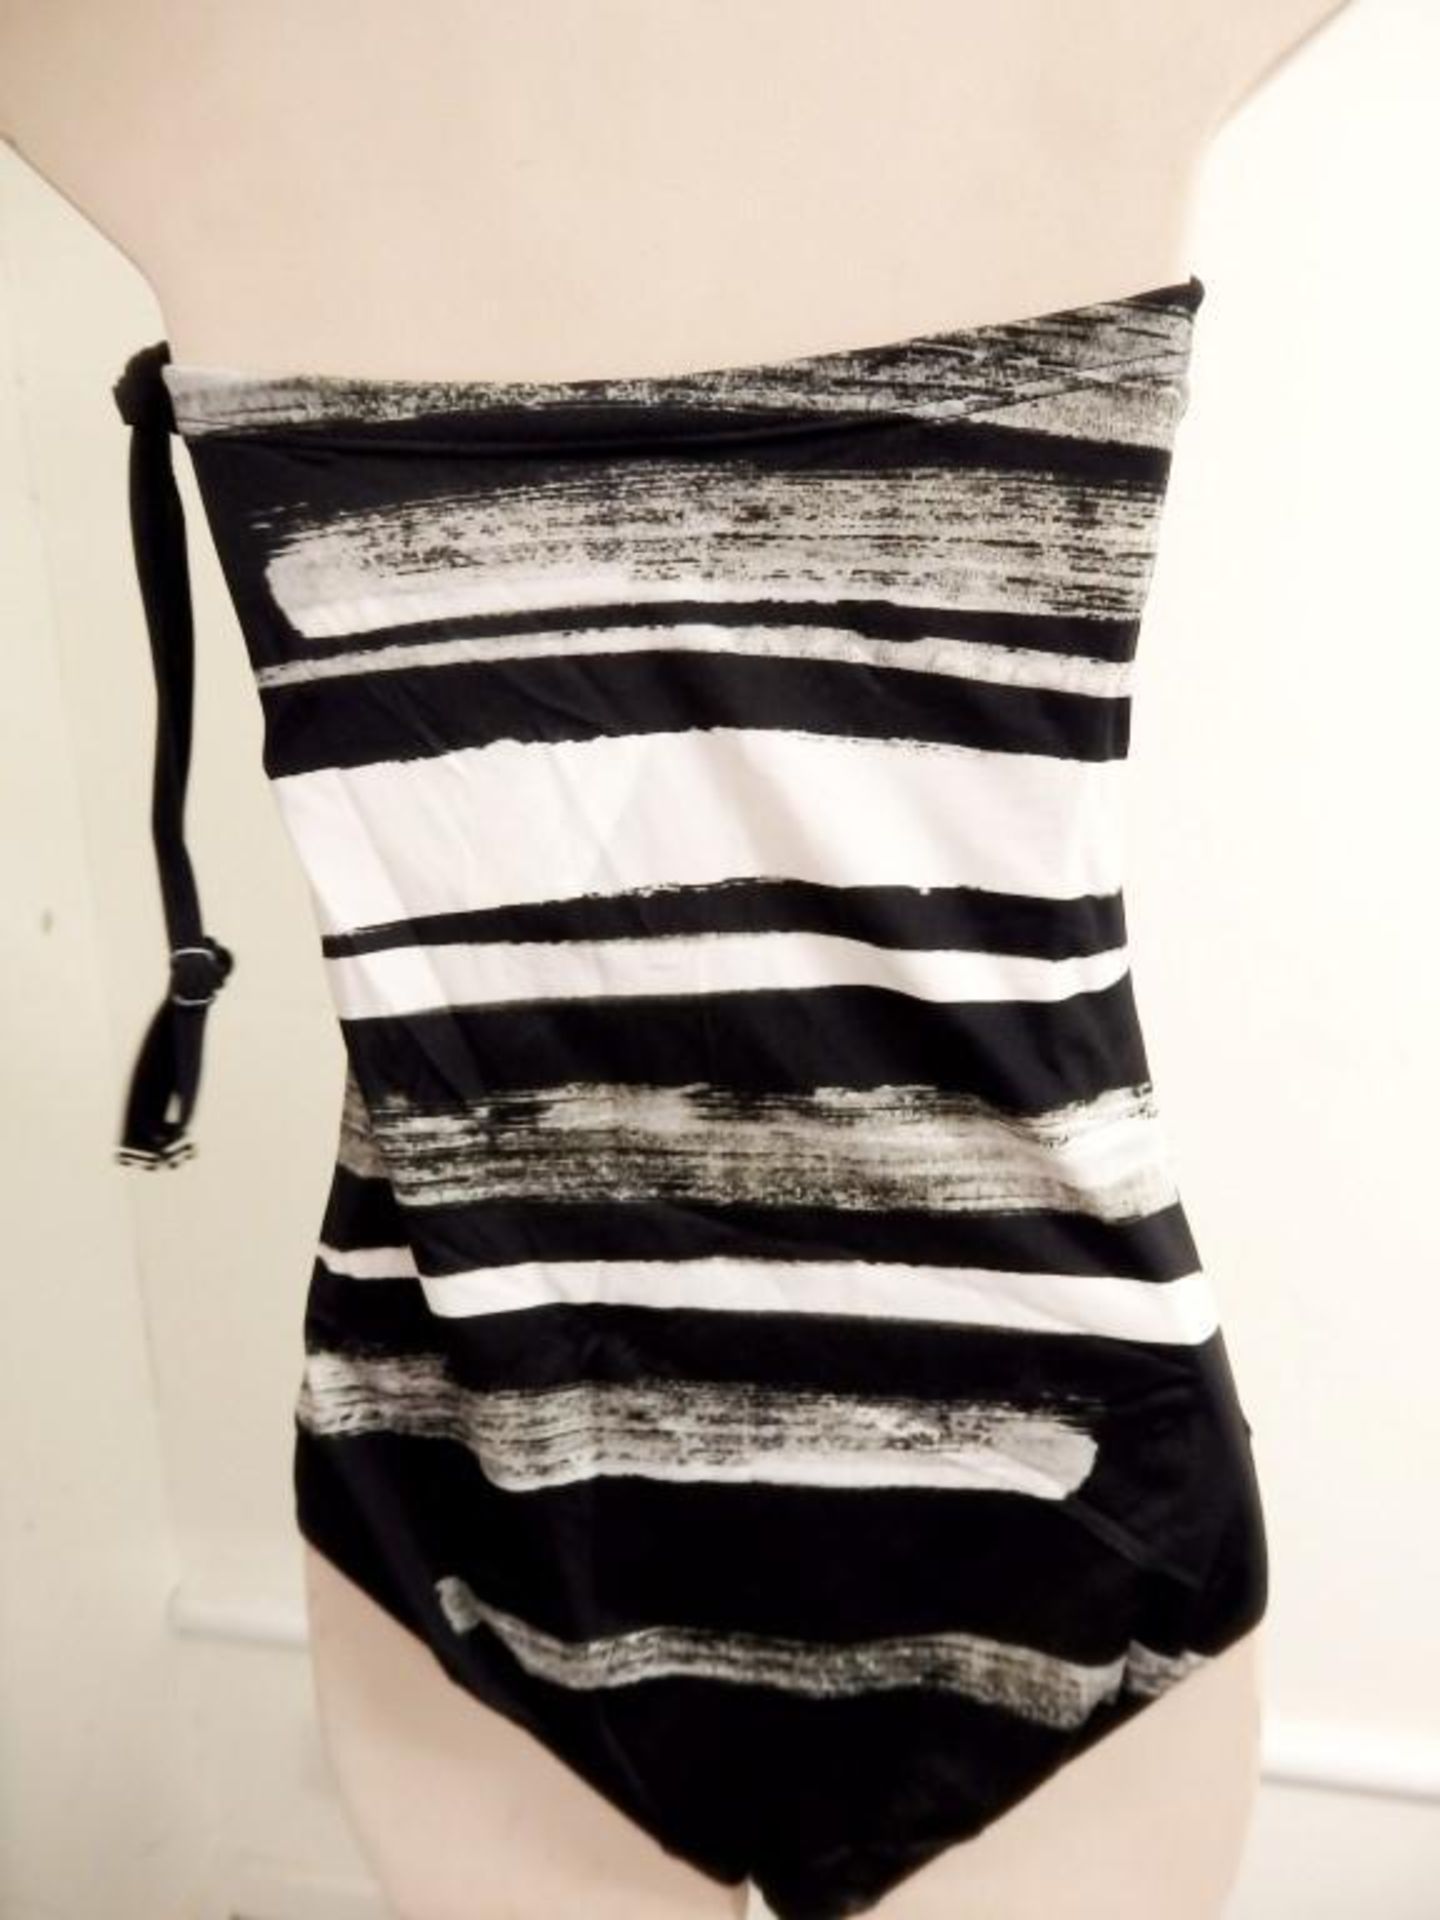 1 x Rasurel - Black/Ecru and vibrant patternedbustier -Cuba Swimsuit - R20738 - Size 2C - UK 32 - Image 4 of 7